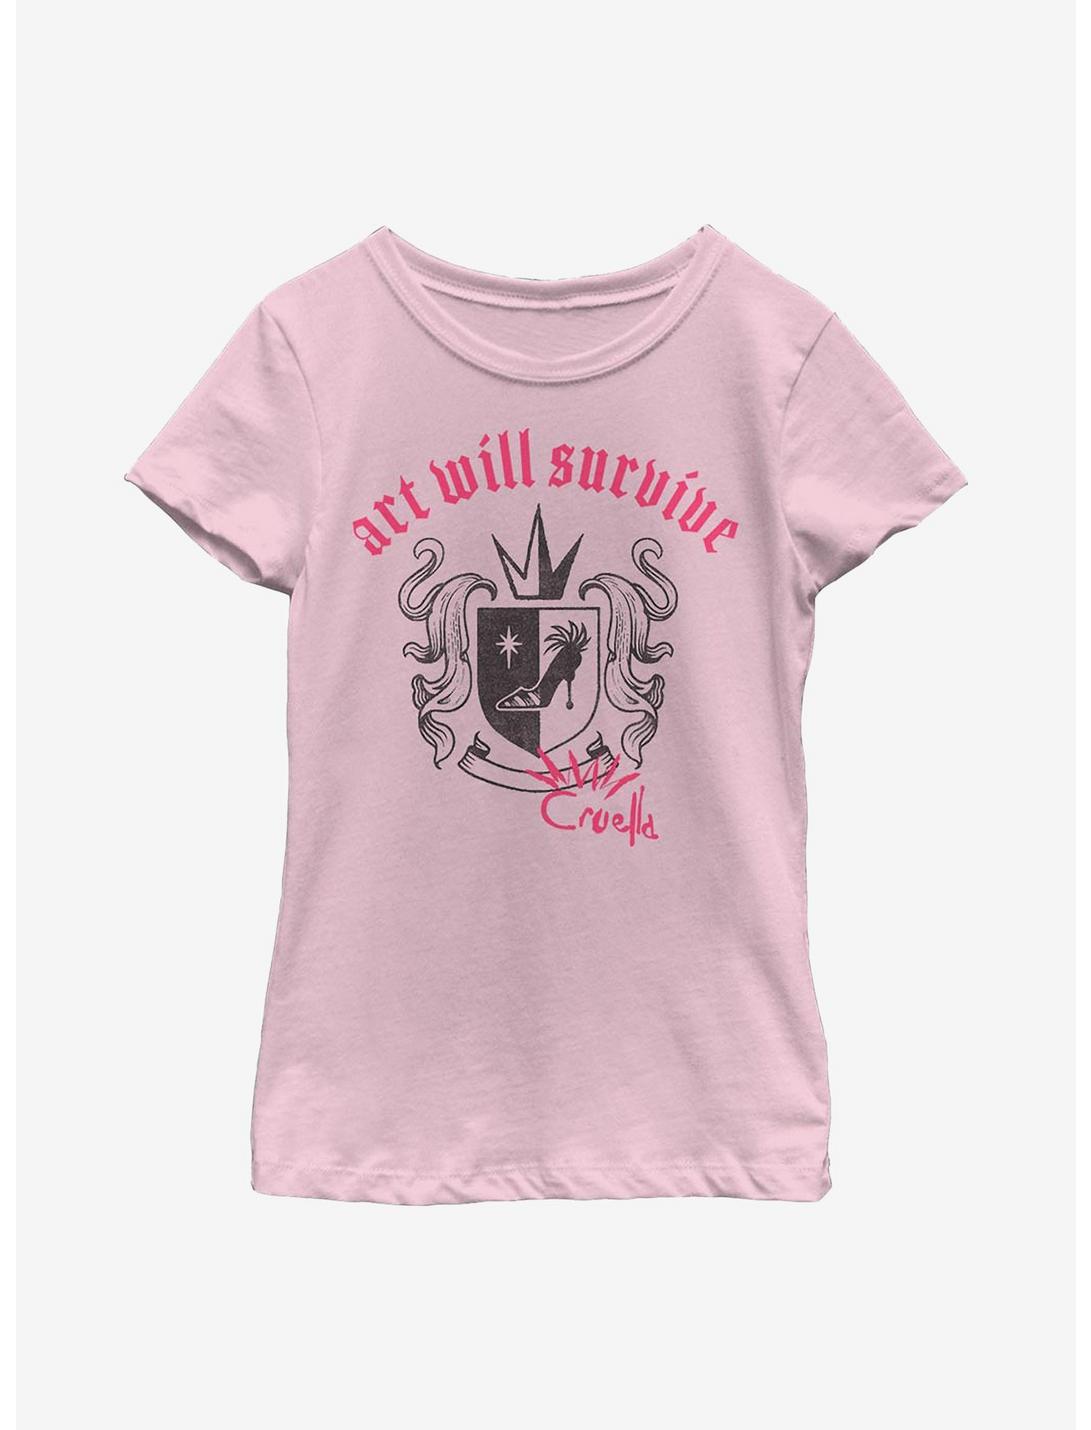 Disney Cruella Art Will Survive Youth Girls T-Shirt, PINK, hi-res